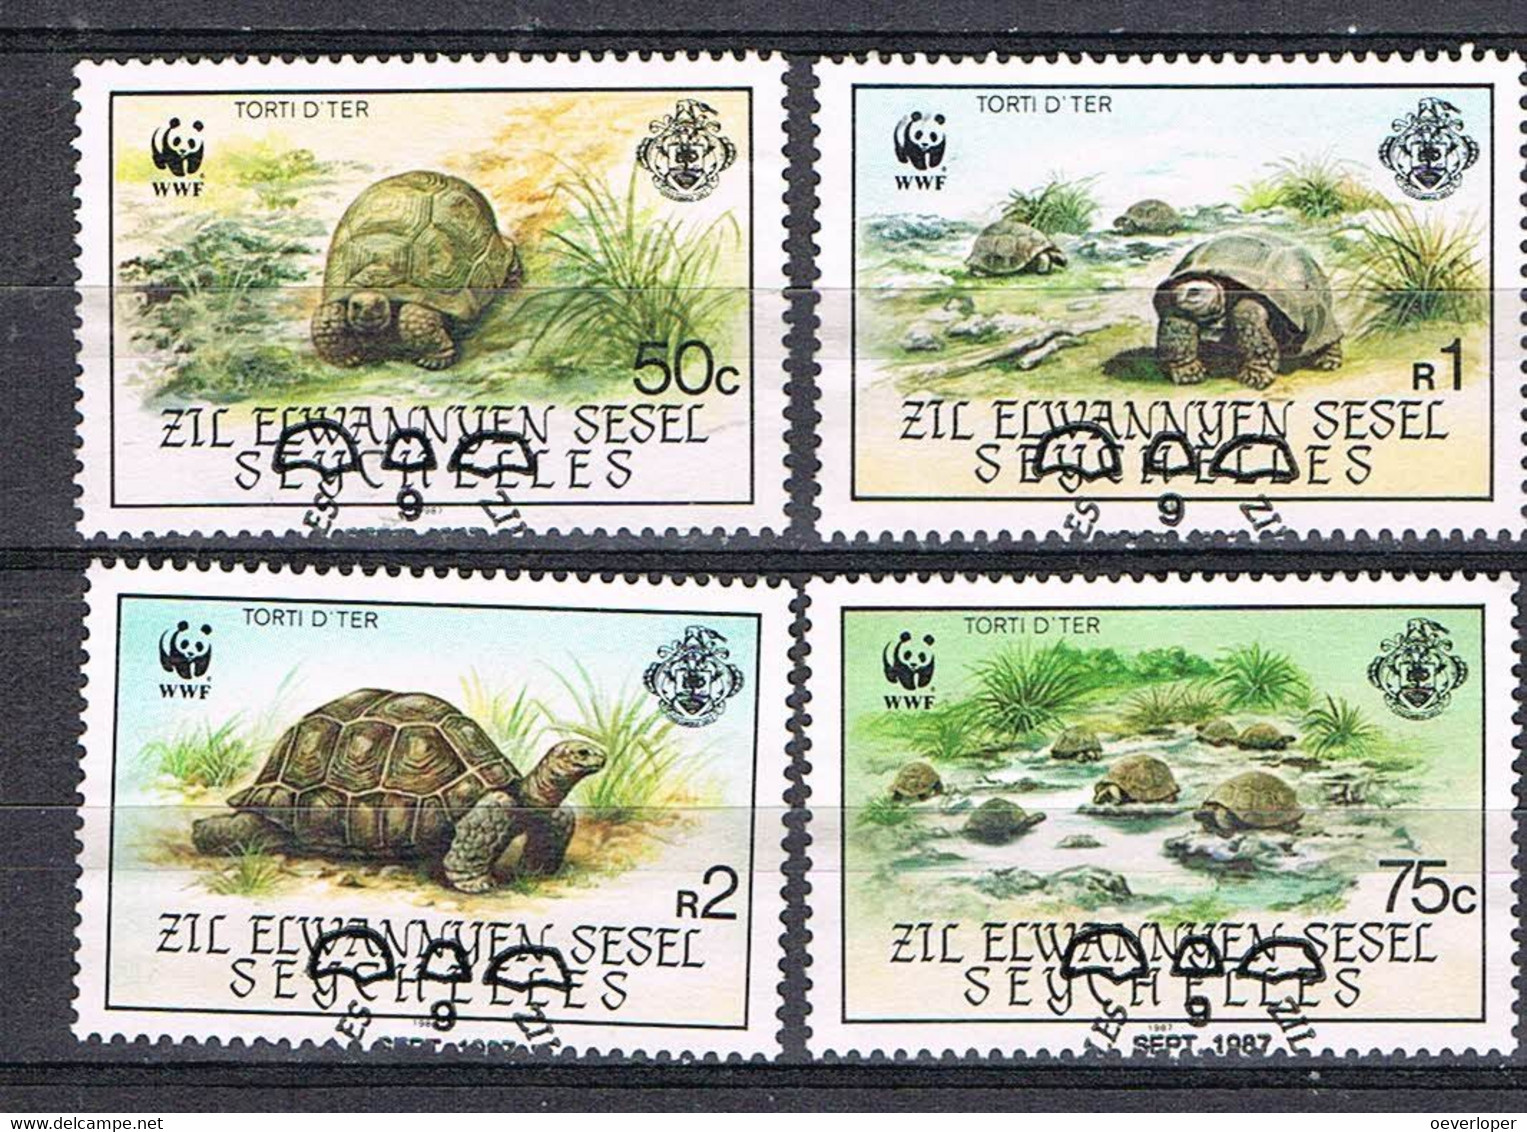 Seychelles 1985 Turtles WWF Used - Used Stamps